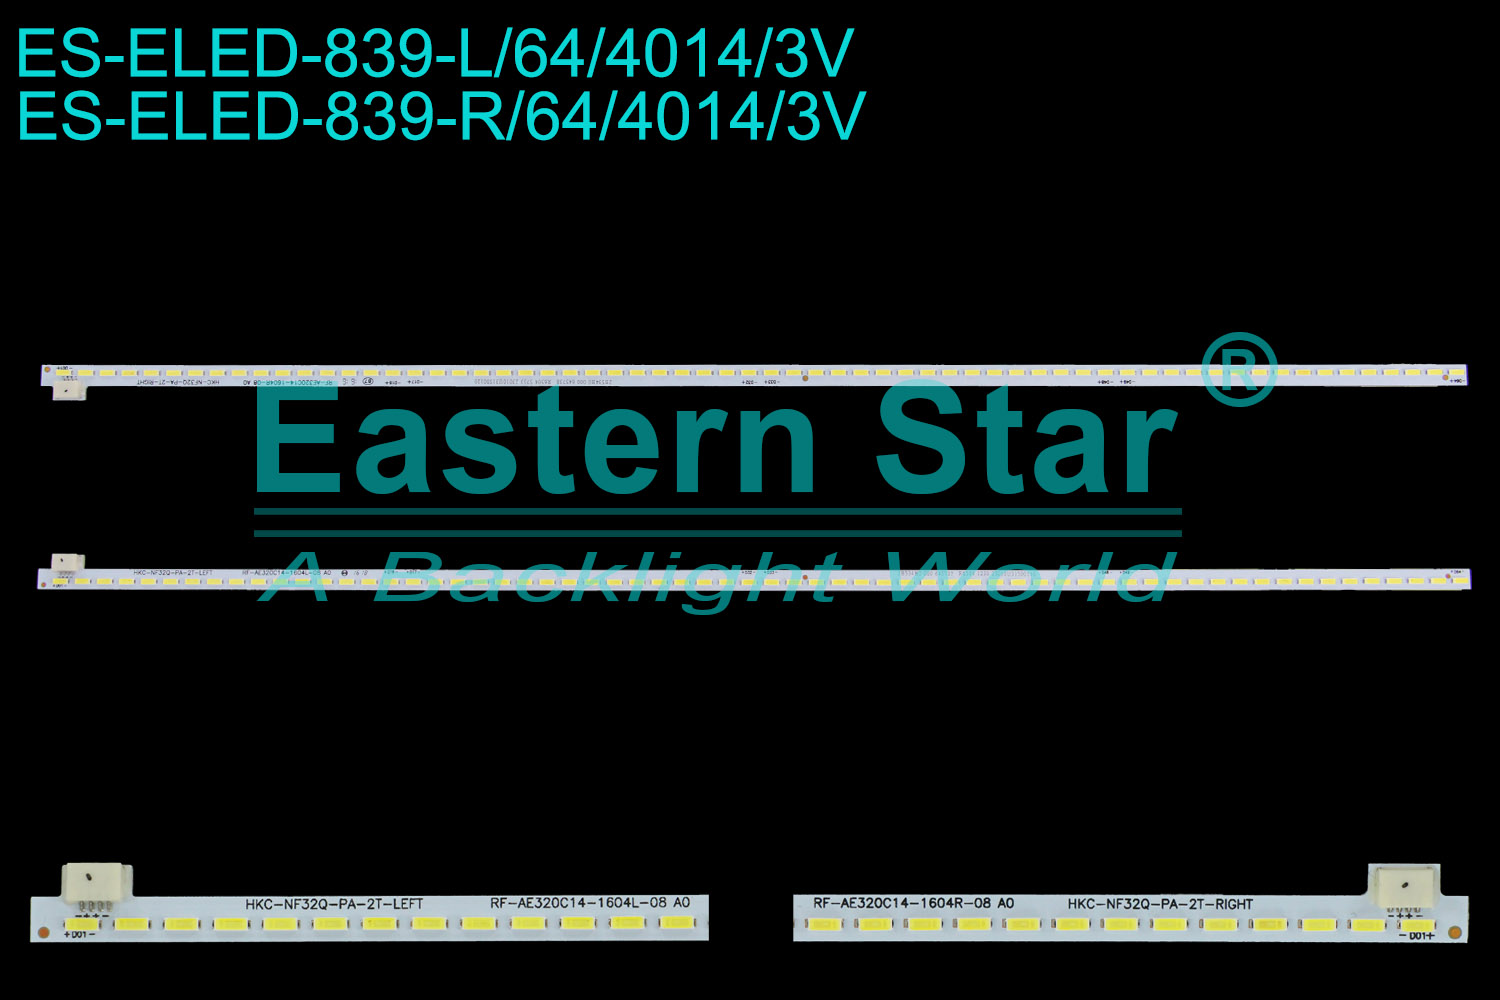 ES-ELED-839 ELED/EDGE TV backlight use for 32''  L:RF-AE320C14-1604L-08 A0 HKC-NF32Q-PA-2T-LEFT R:RF-AE320C14-1604R-08 A0 HKC-NF32Q-PA-2T-RIGHT LED BACKLIGHT KITS(2)